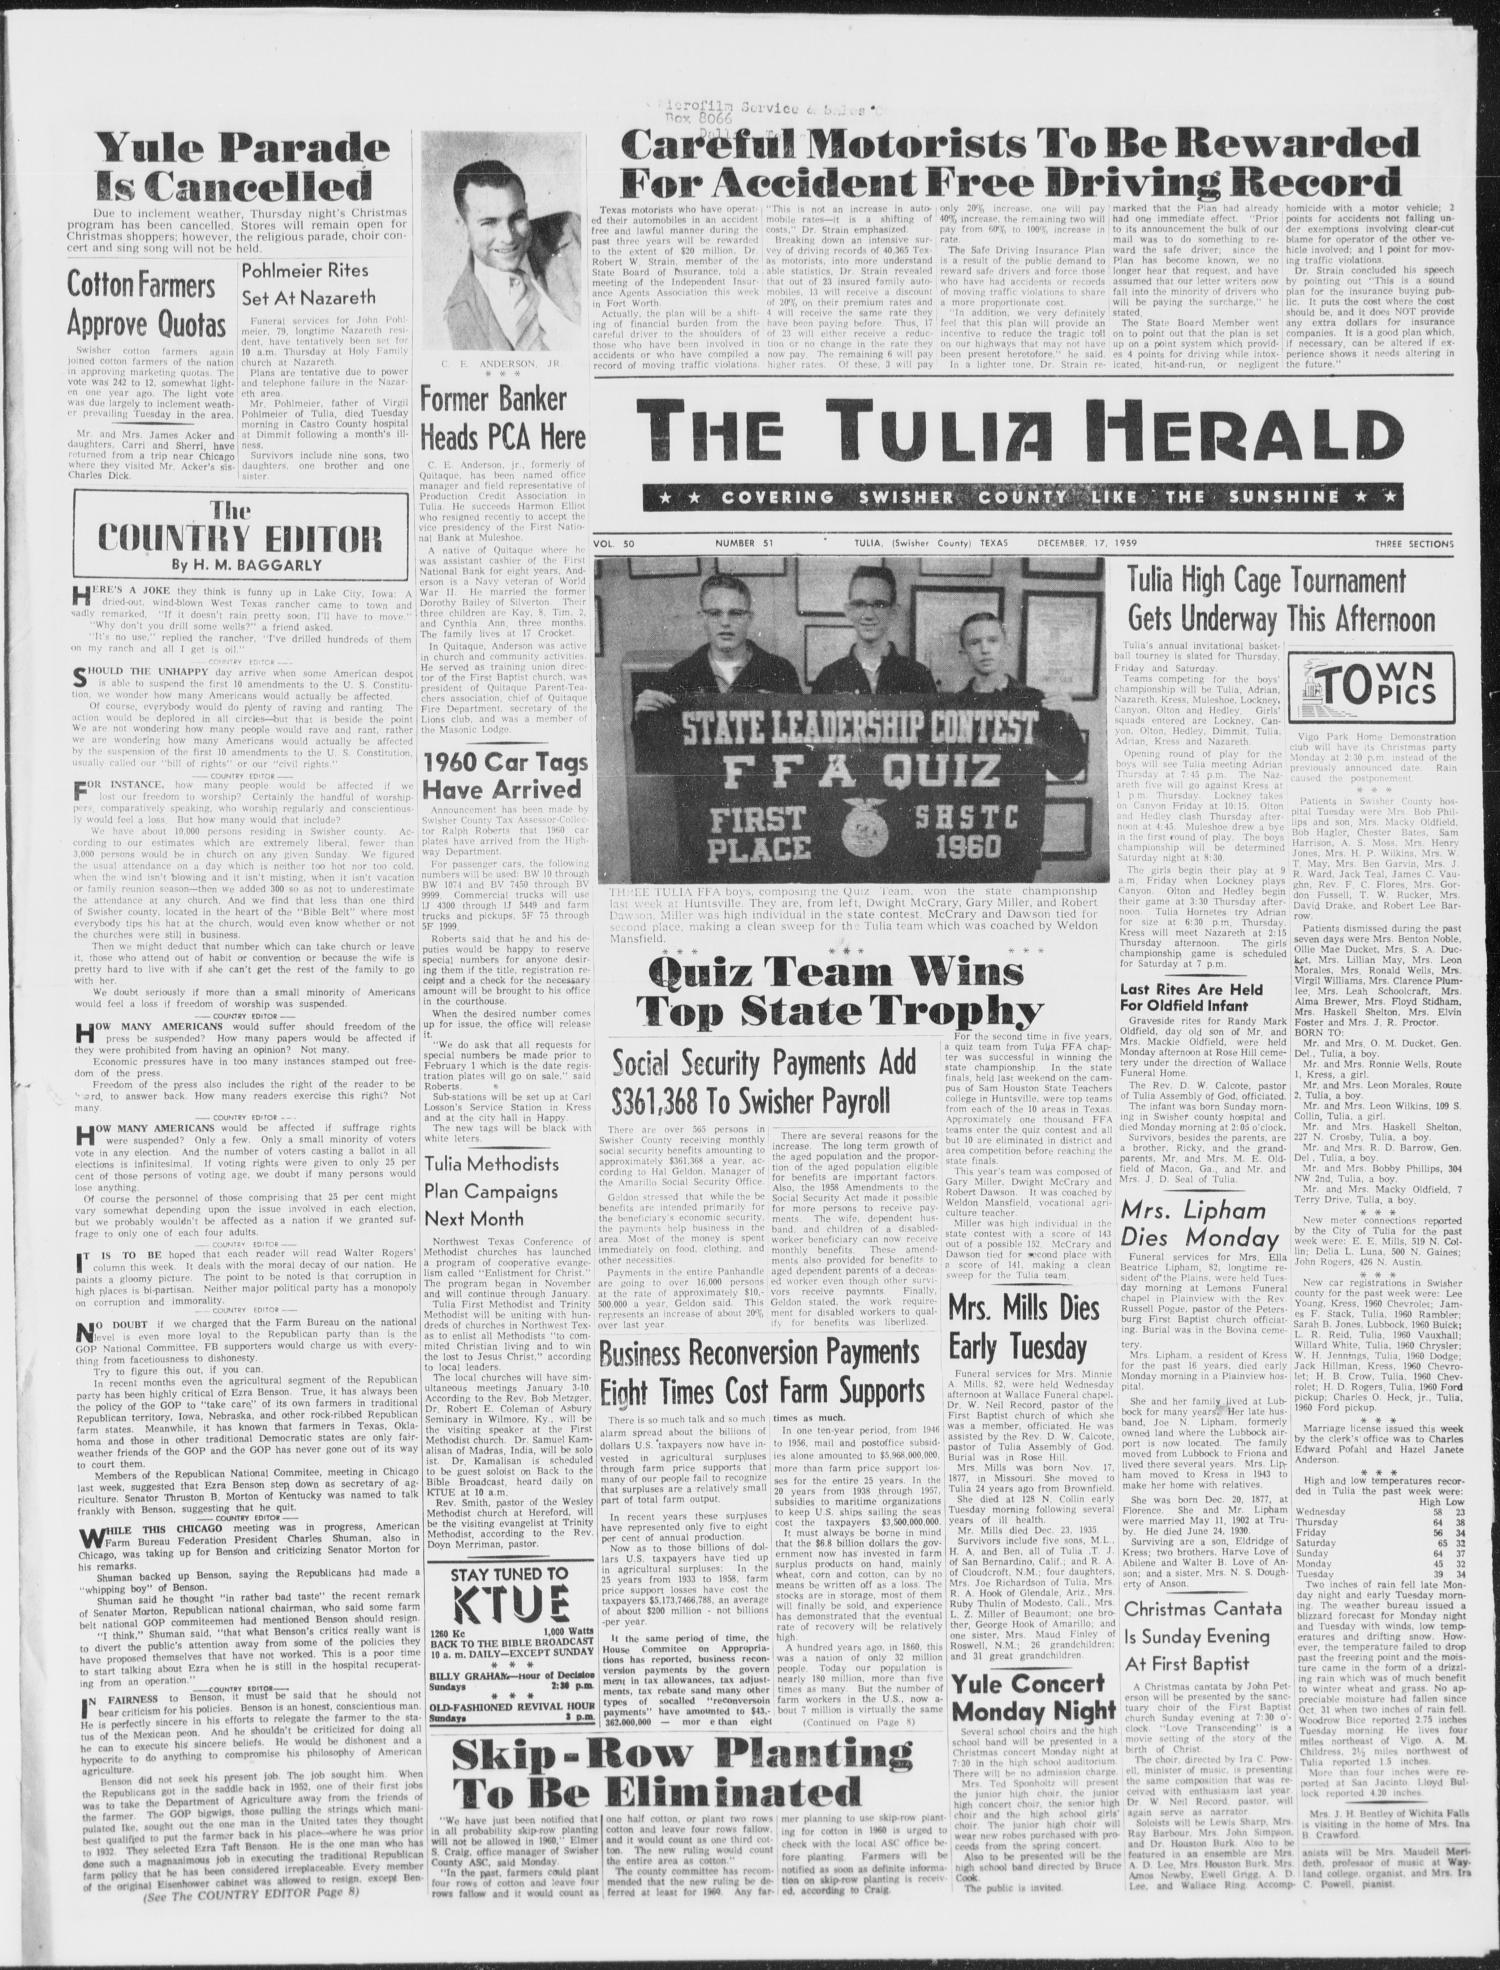 The Tulia Herald (Tulia, Tex), Vol. 50, No. 51, Ed. 1, Thursday, December 17, 1959
                                                
                                                    1
                                                